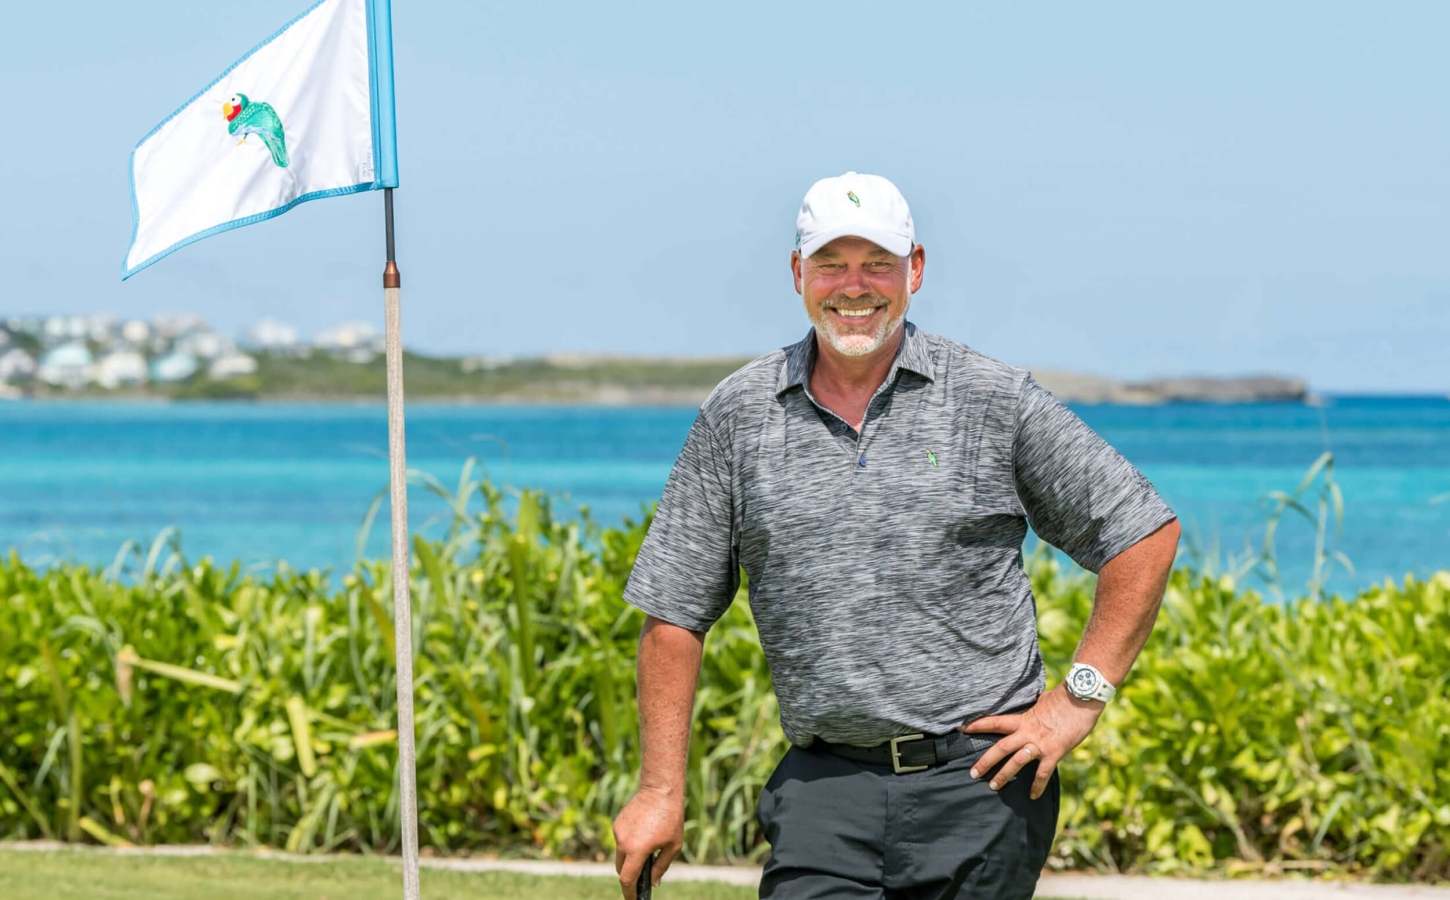 Abaco Club Ambassador and professional golfer Darren Clarke